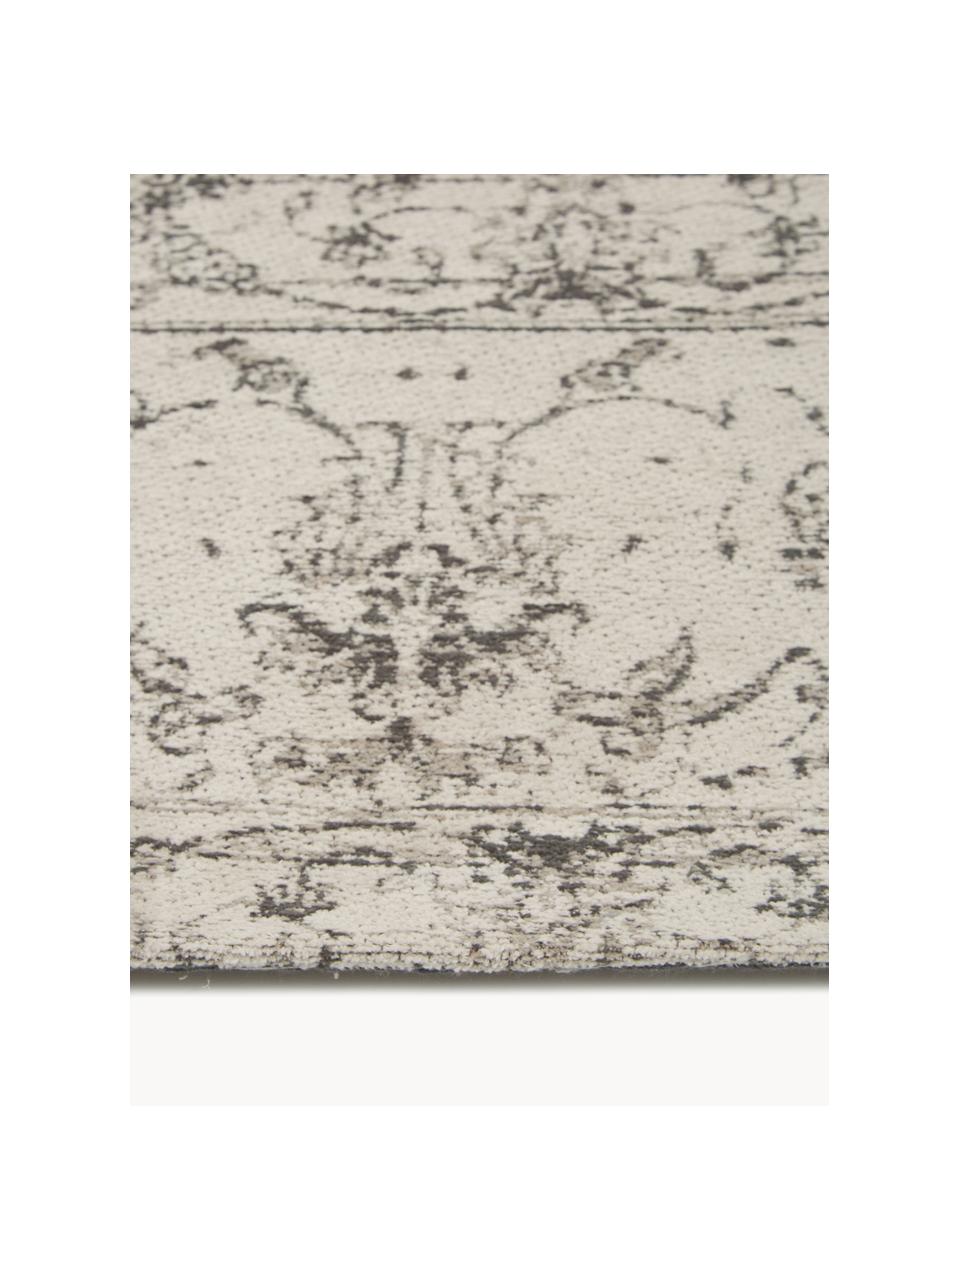 Ručně tkaný žinylkový koberec Sofia, Béžová, šedá, Š 160 cm, D 230 cm (velikost M)